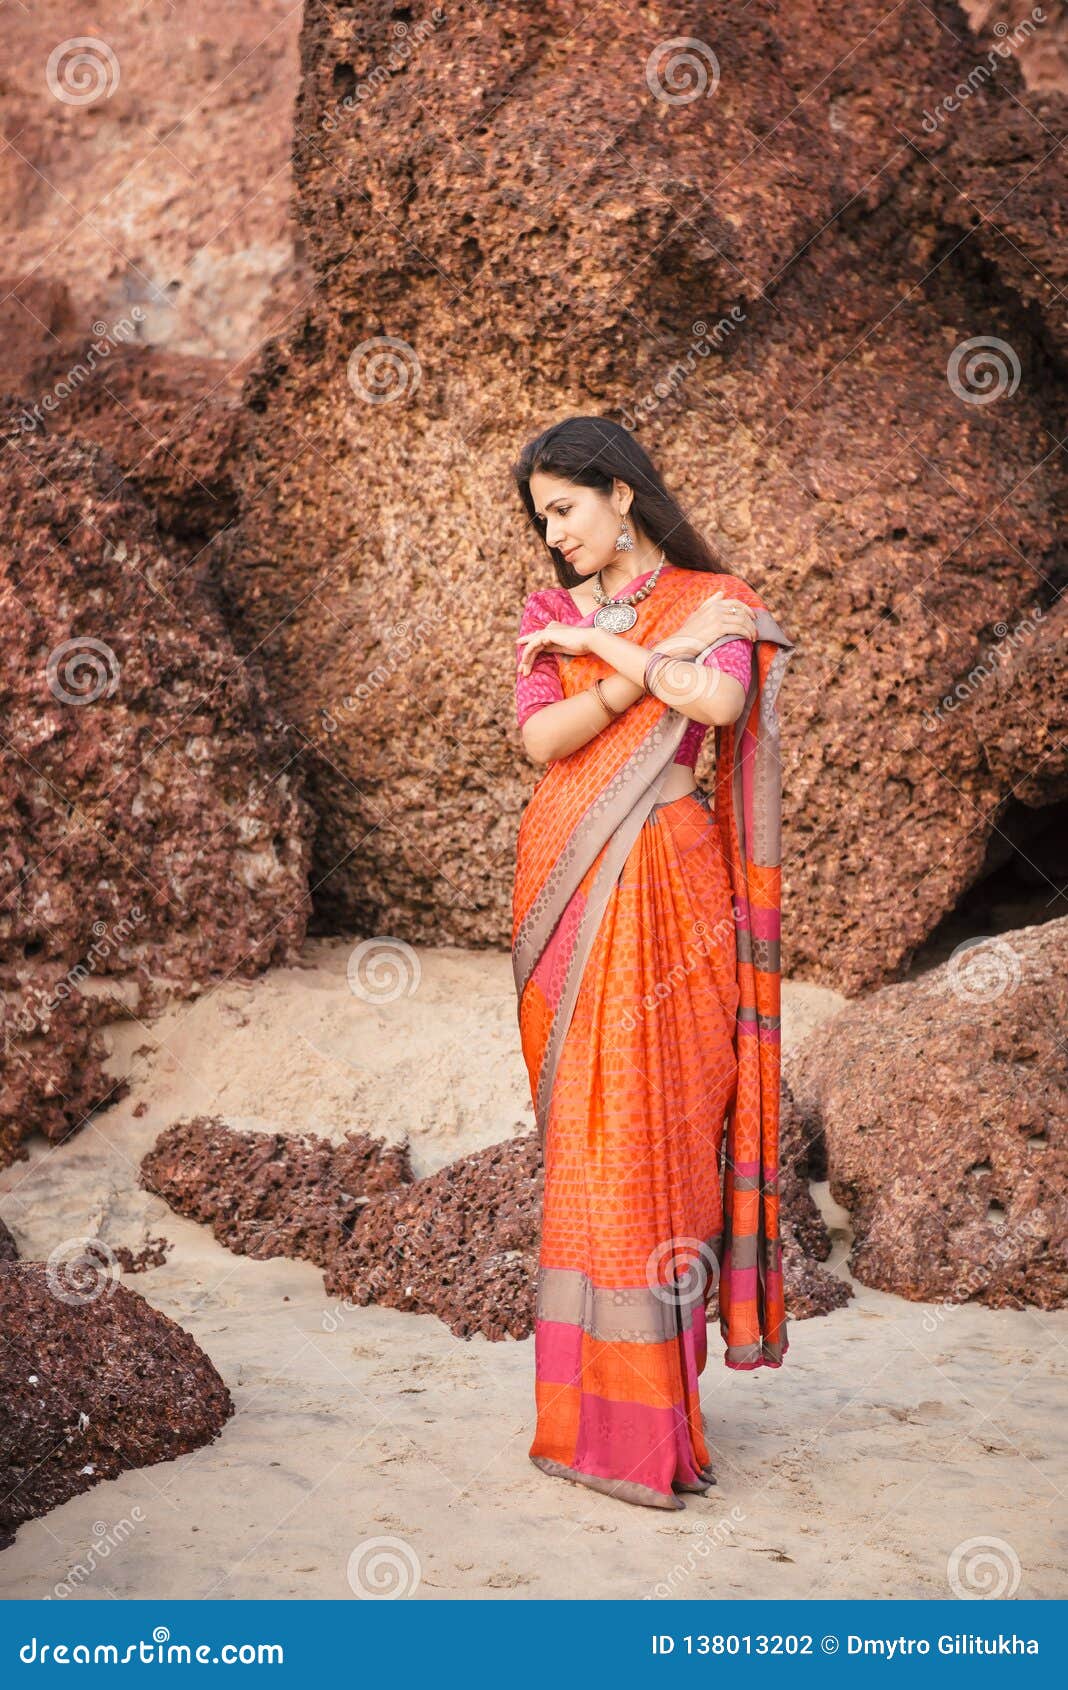 Woman in saree leaning on veranda pillar on Craiyon